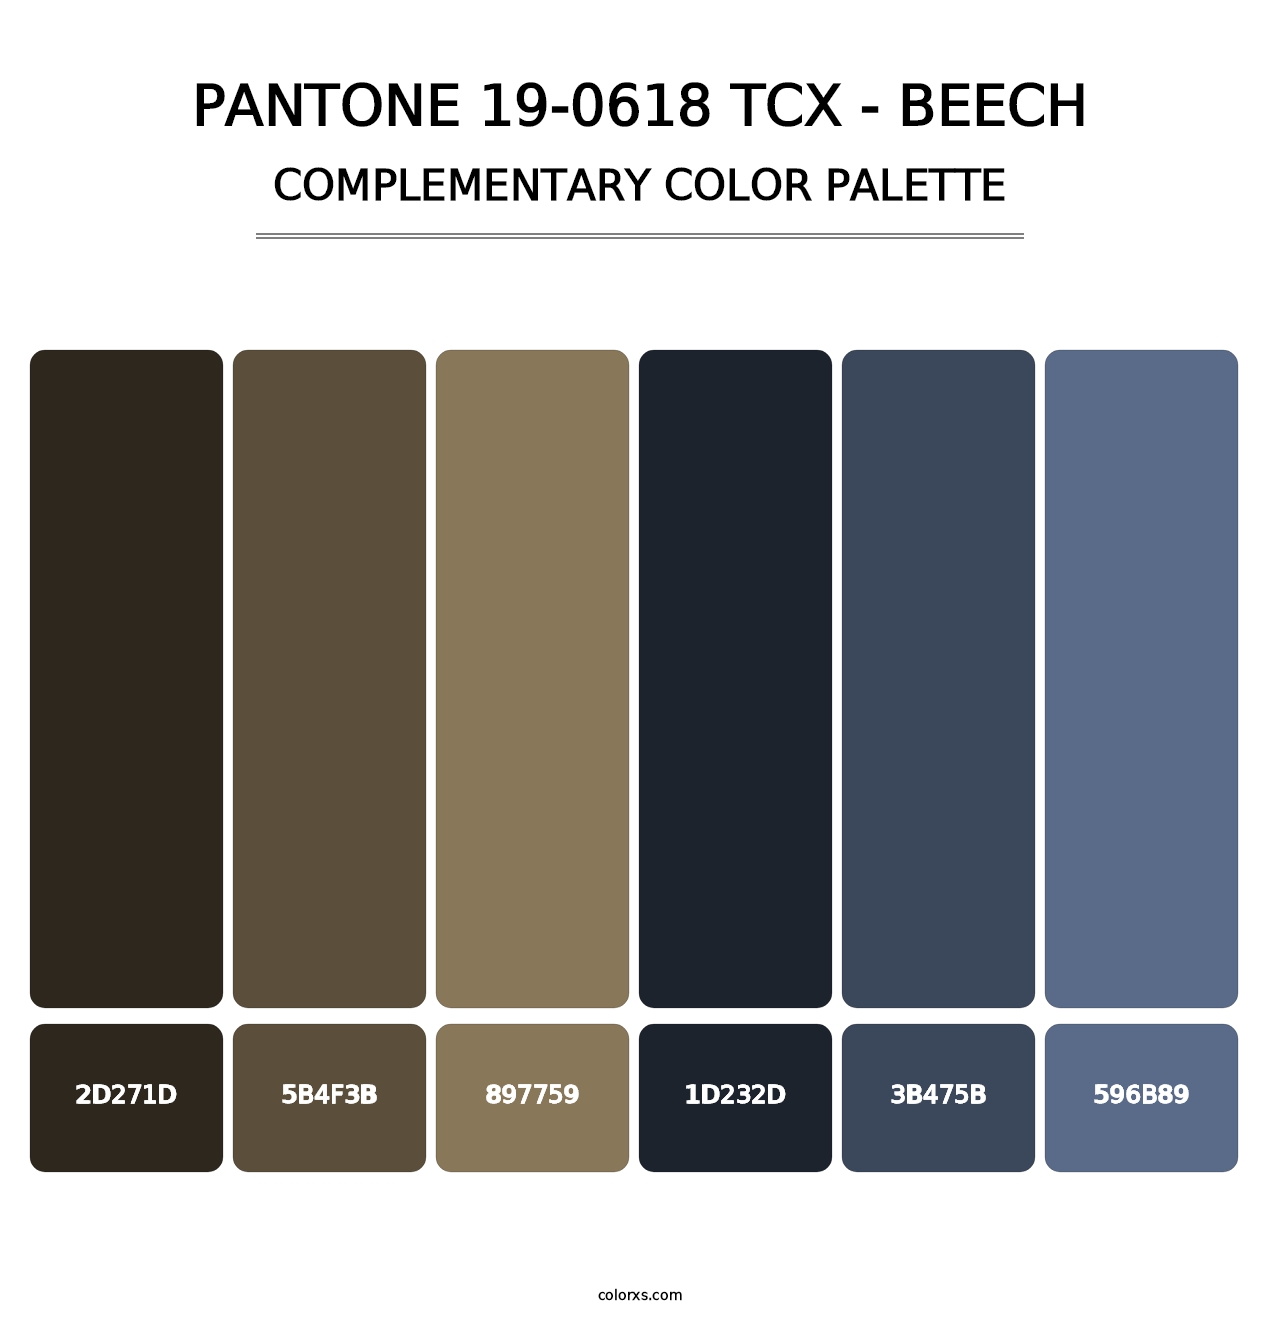 PANTONE 19-0618 TCX - Beech - Complementary Color Palette